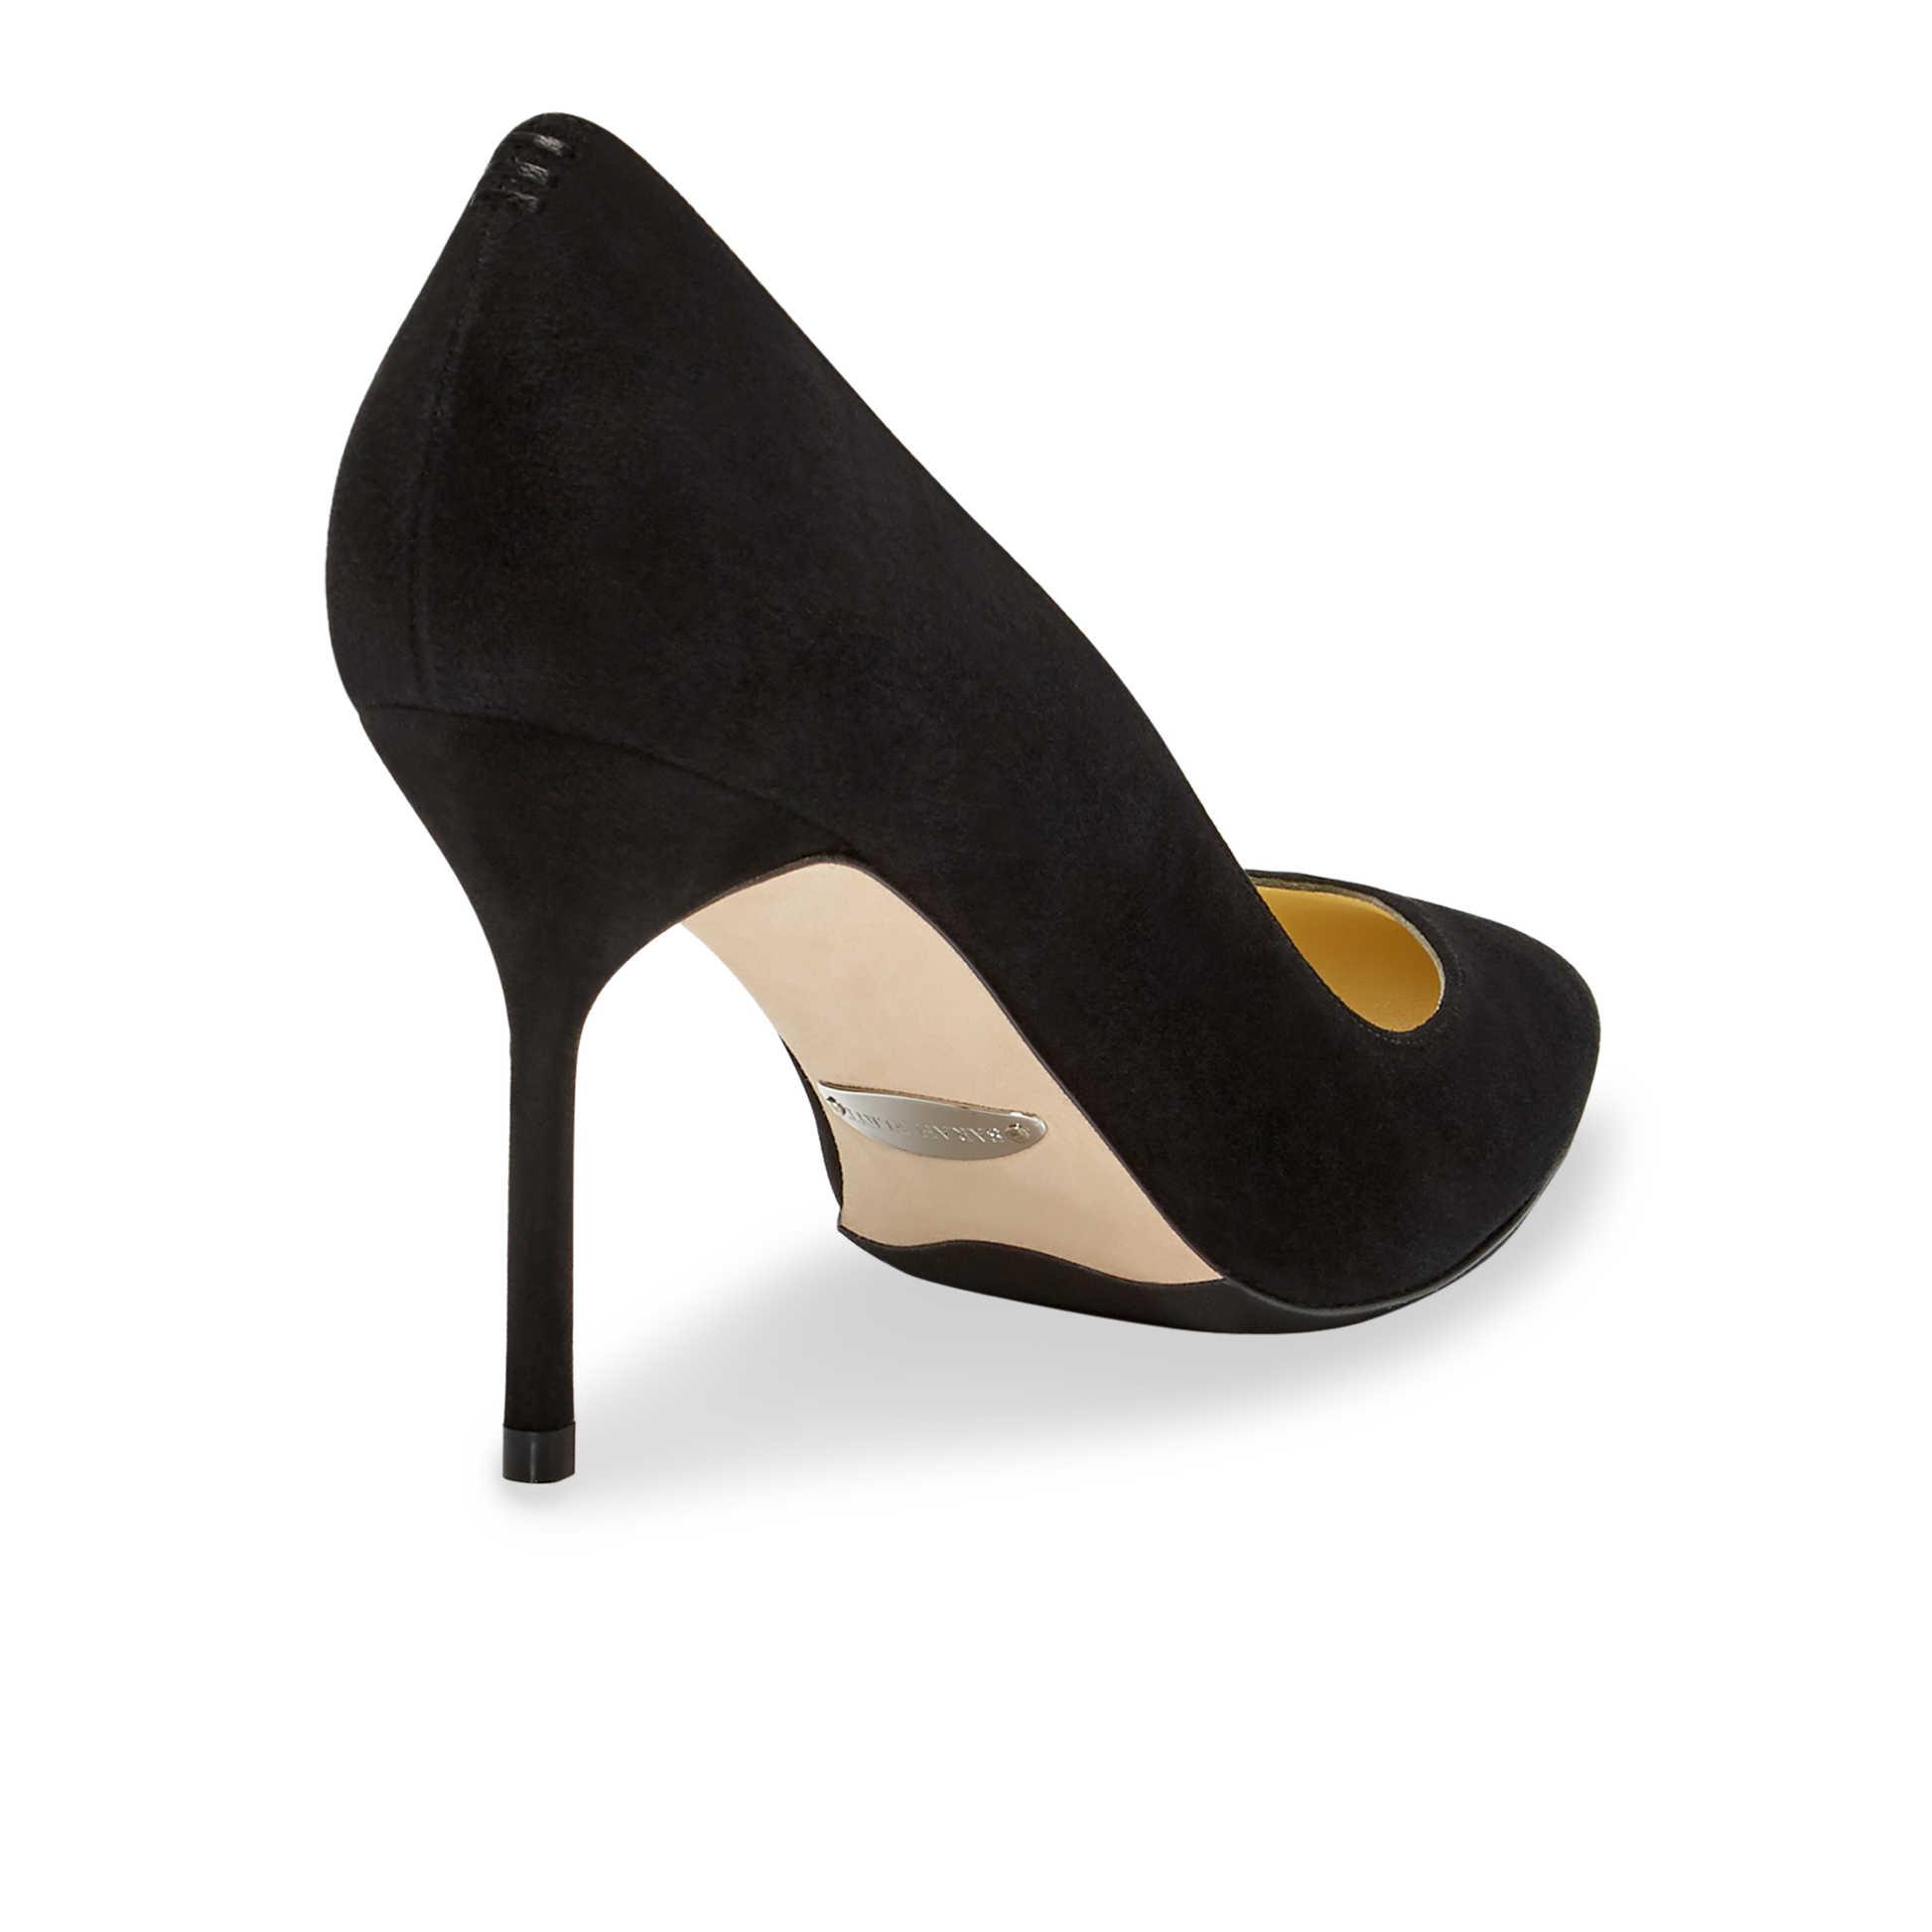 Sarah Flint Perfect Pump 85 Heels in Black Calf | Luxury Heels for Women | Handcrafted Designer Shoes Made in Italy